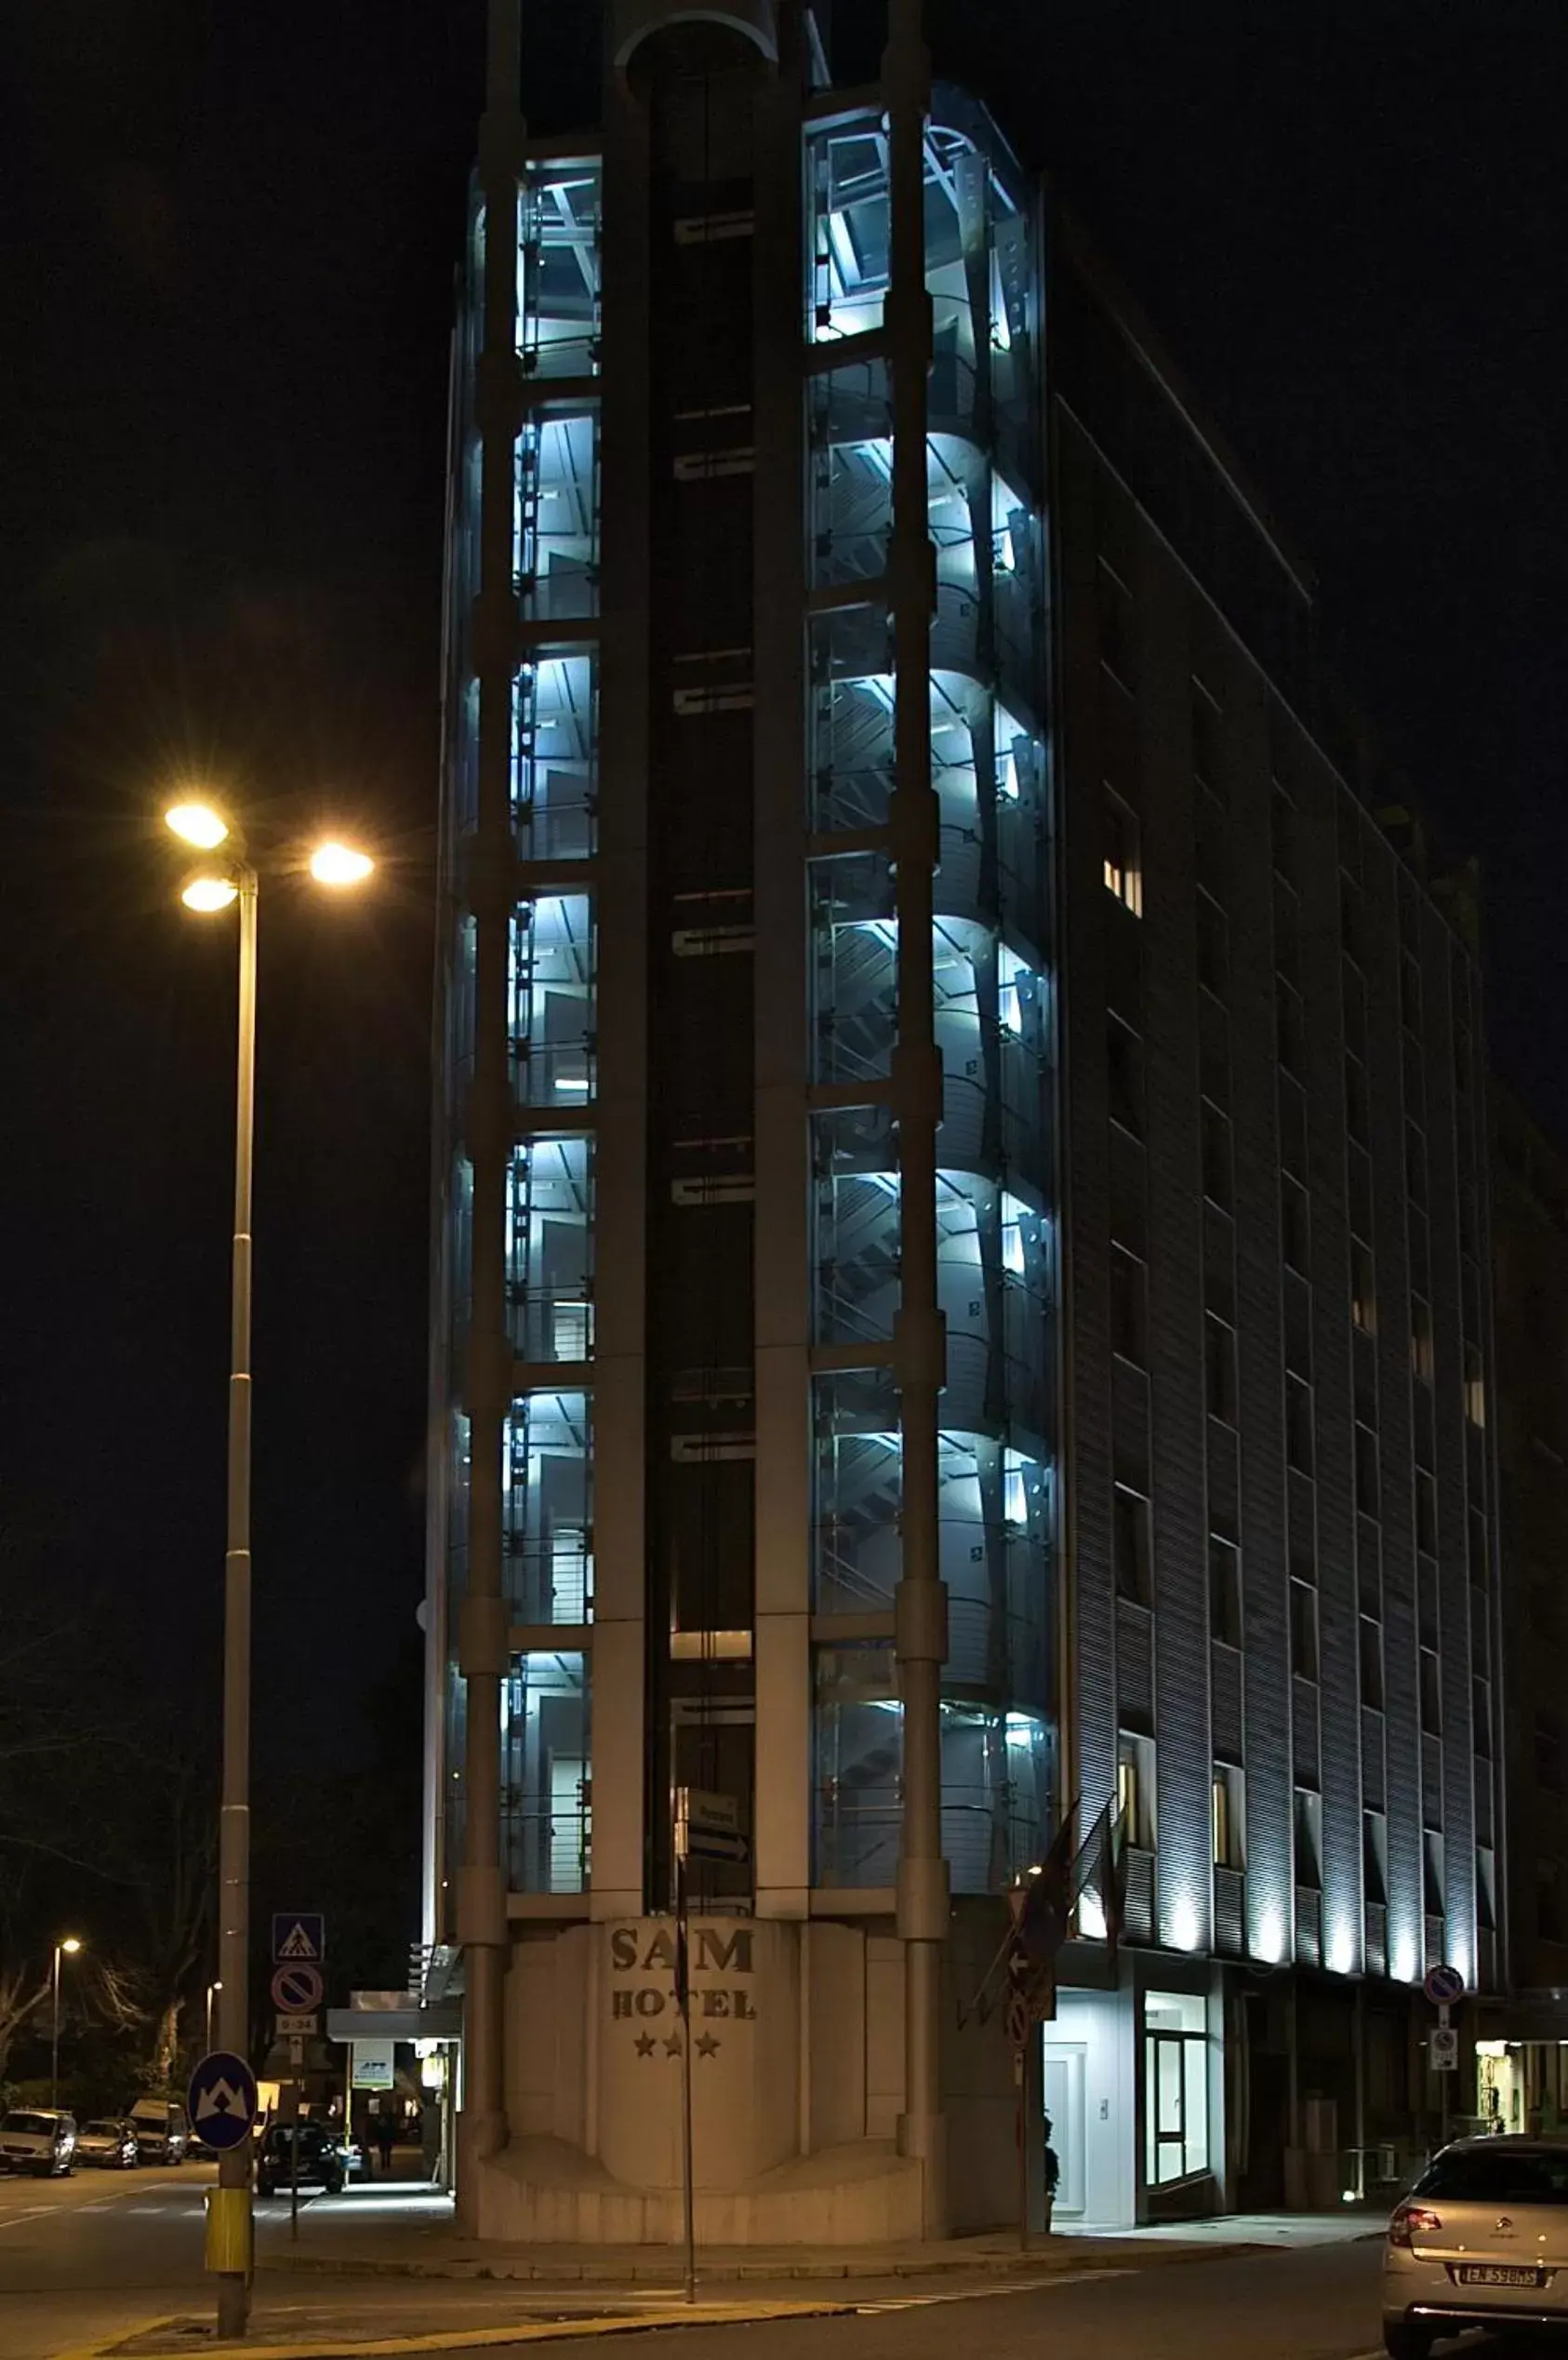 Night, Property Building in Sam Hotel